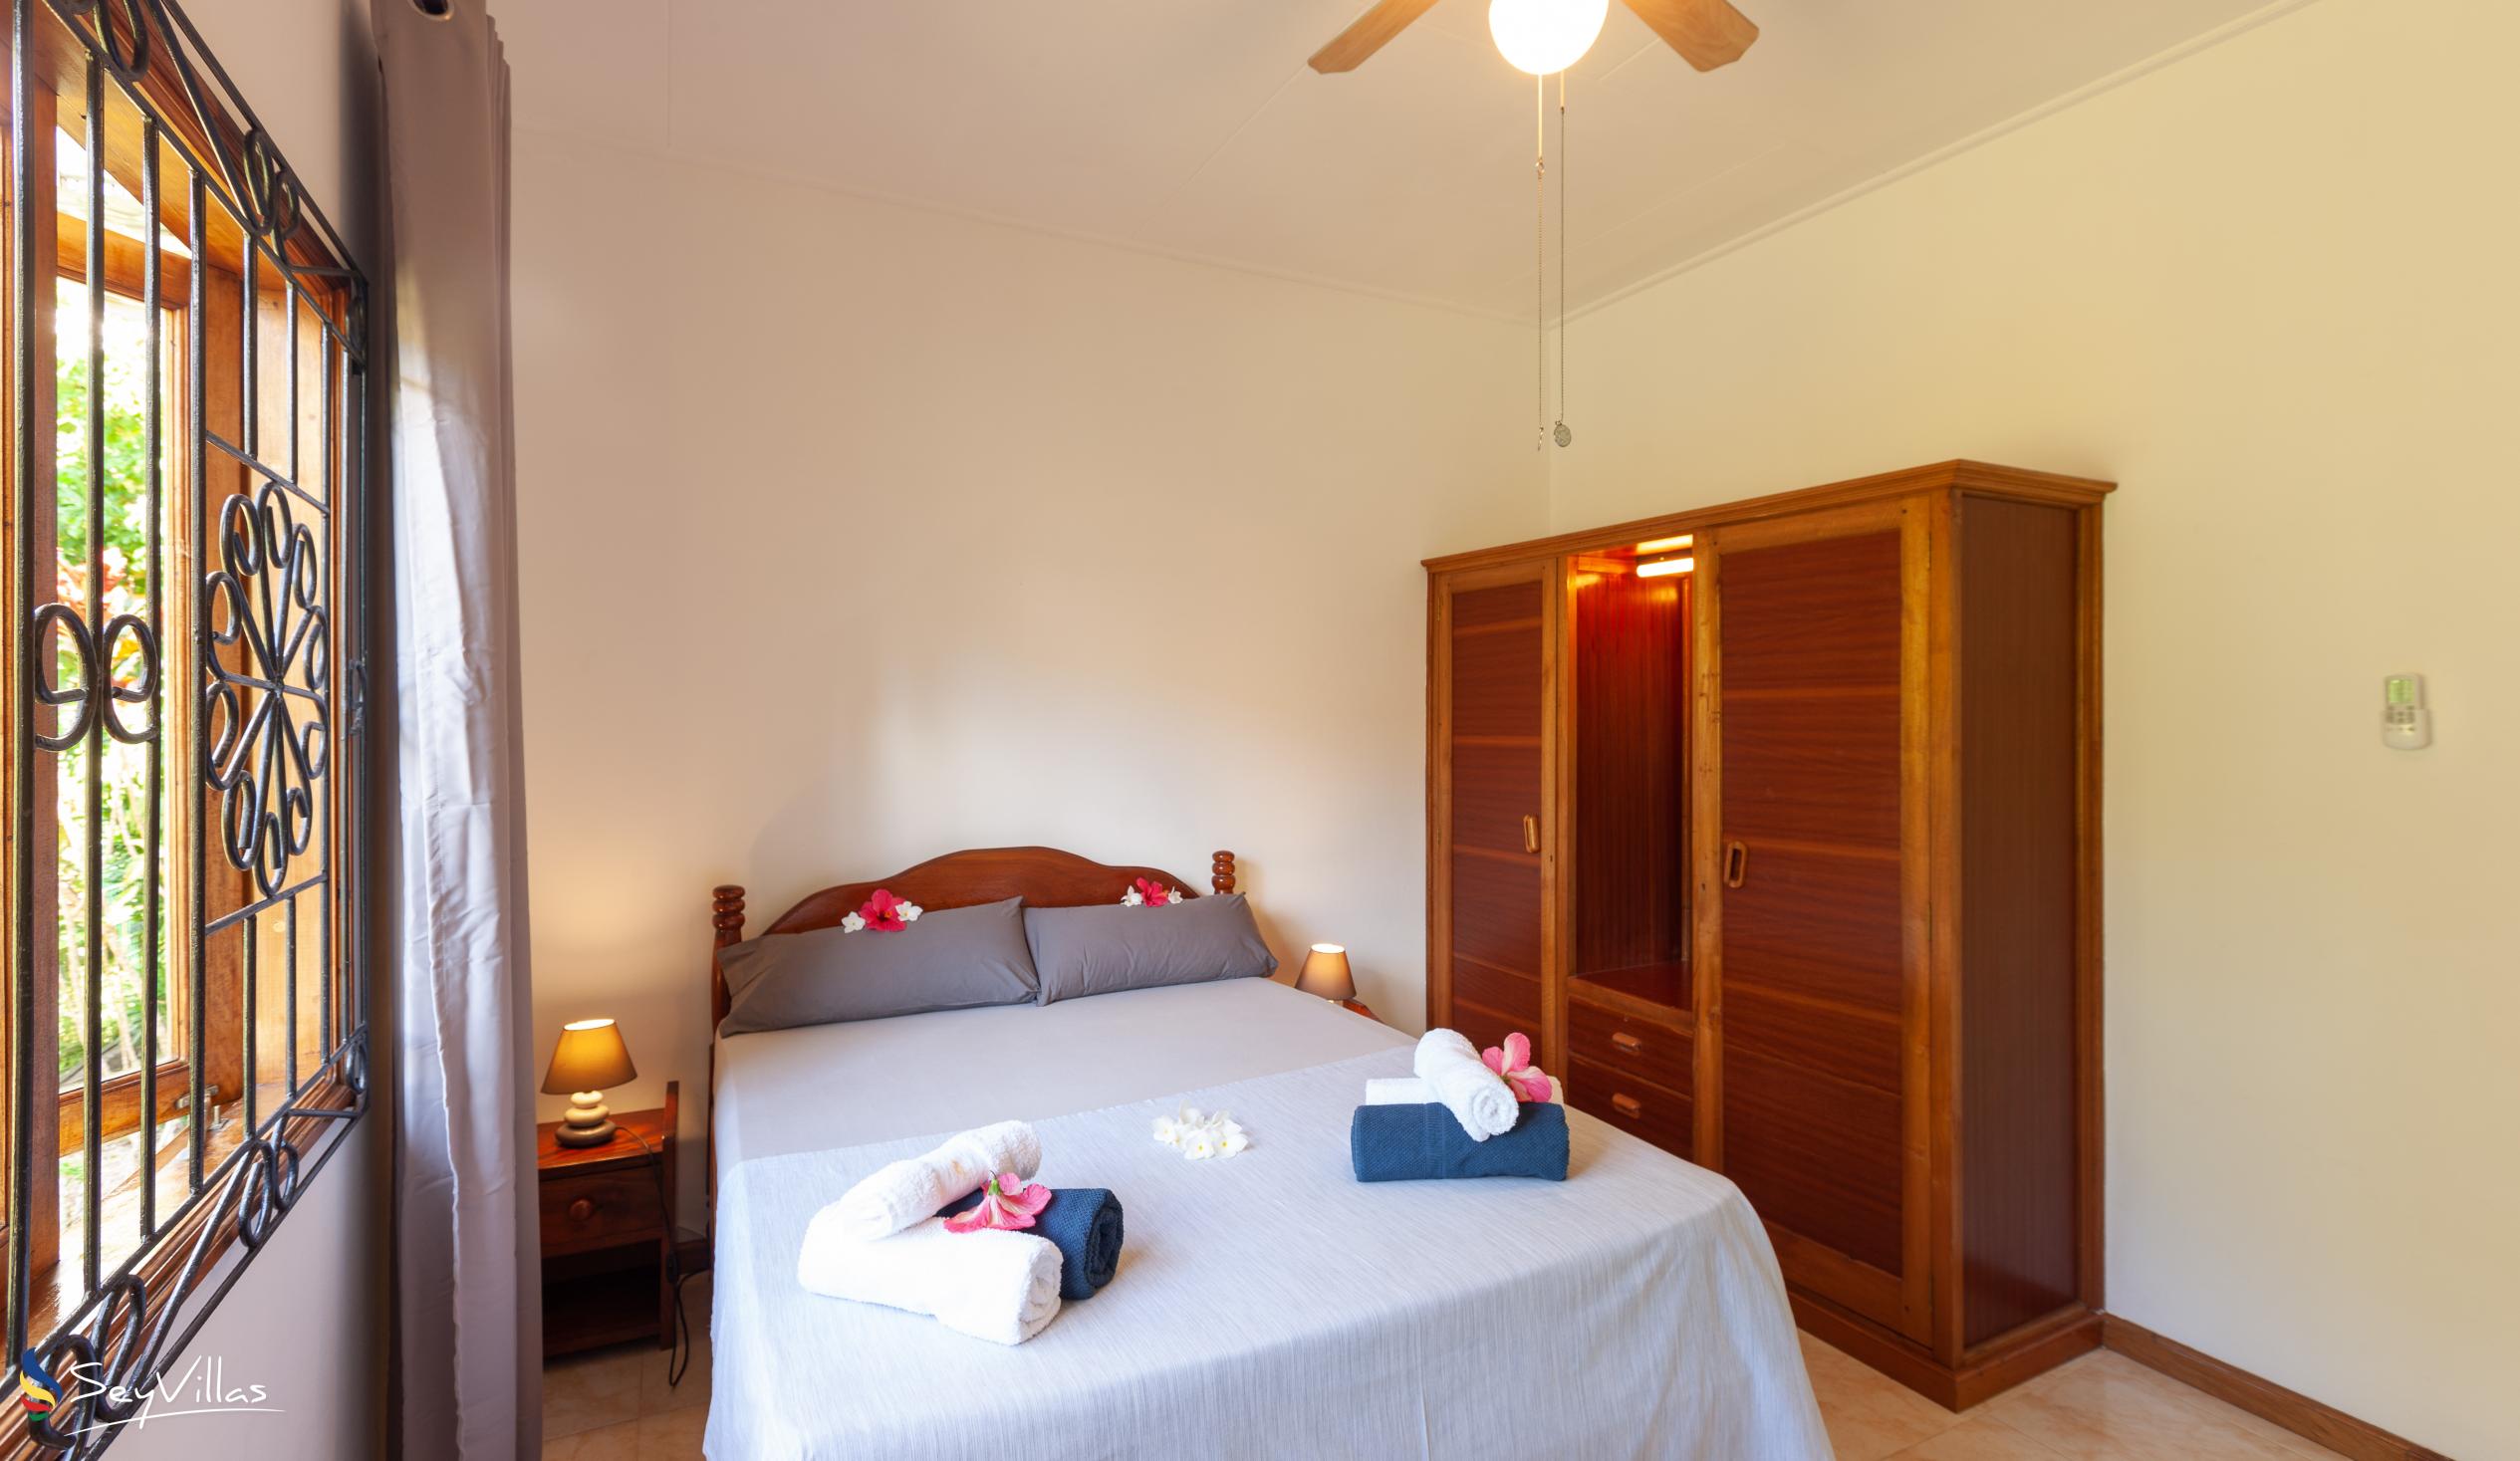 Photo 21: Chez Marlin - 2-Bedroom Guesthouse - Praslin (Seychelles)